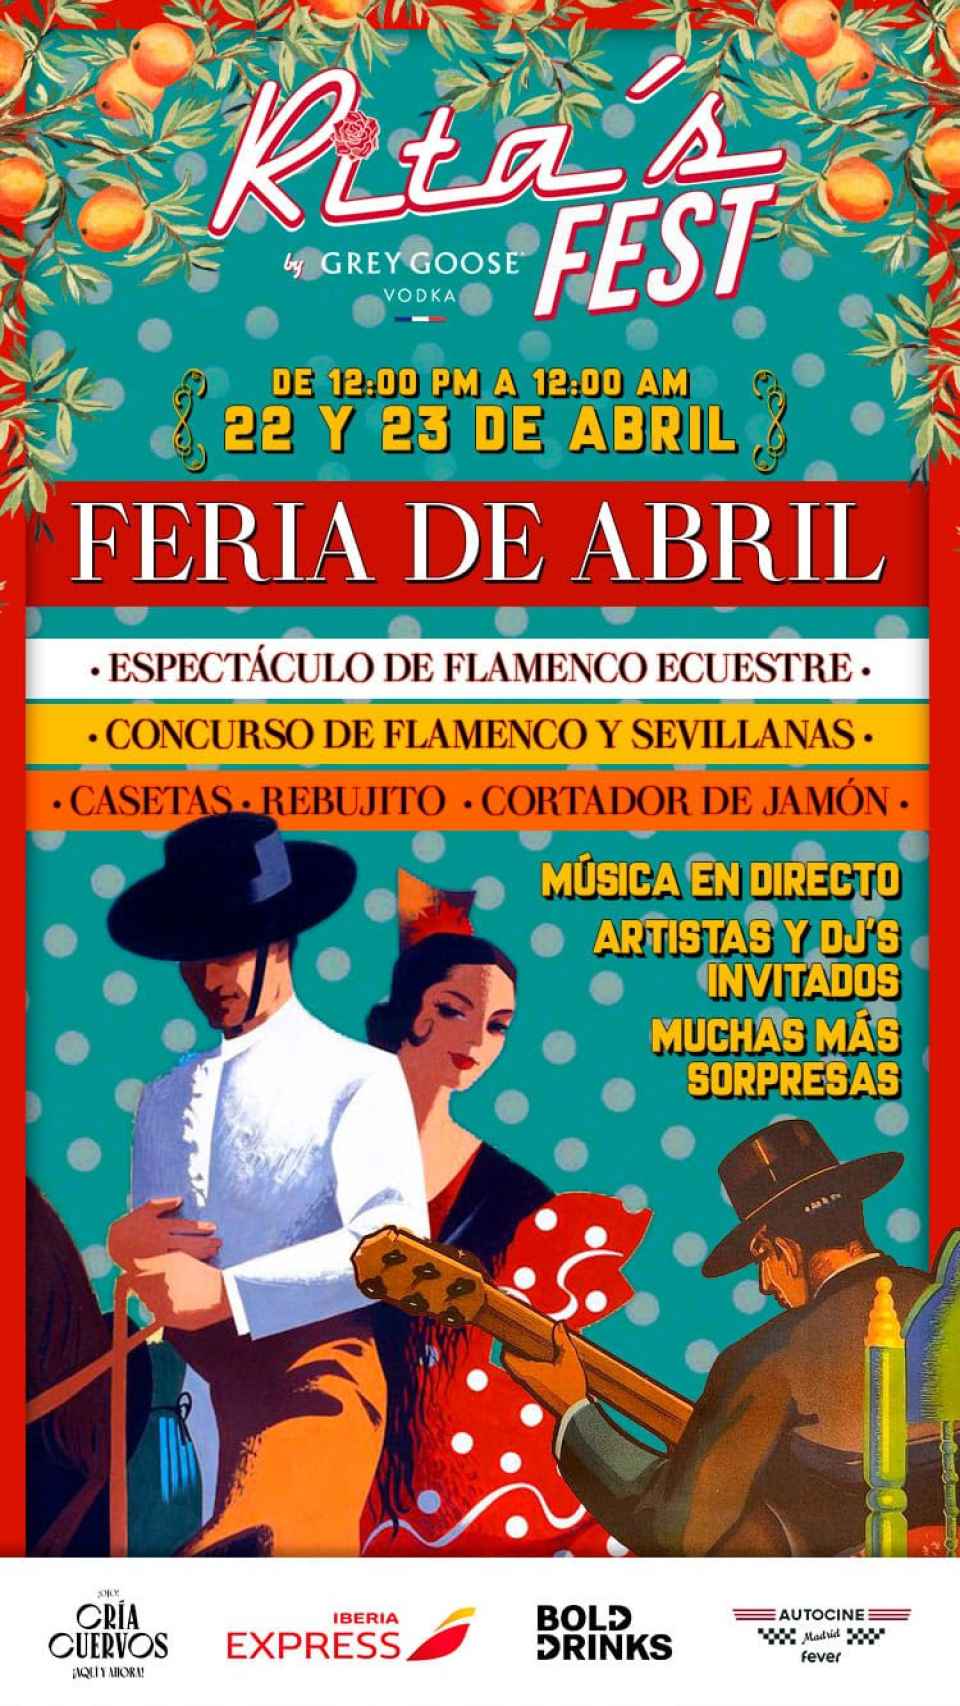 Cartel de la Feria de Abril del autocine.